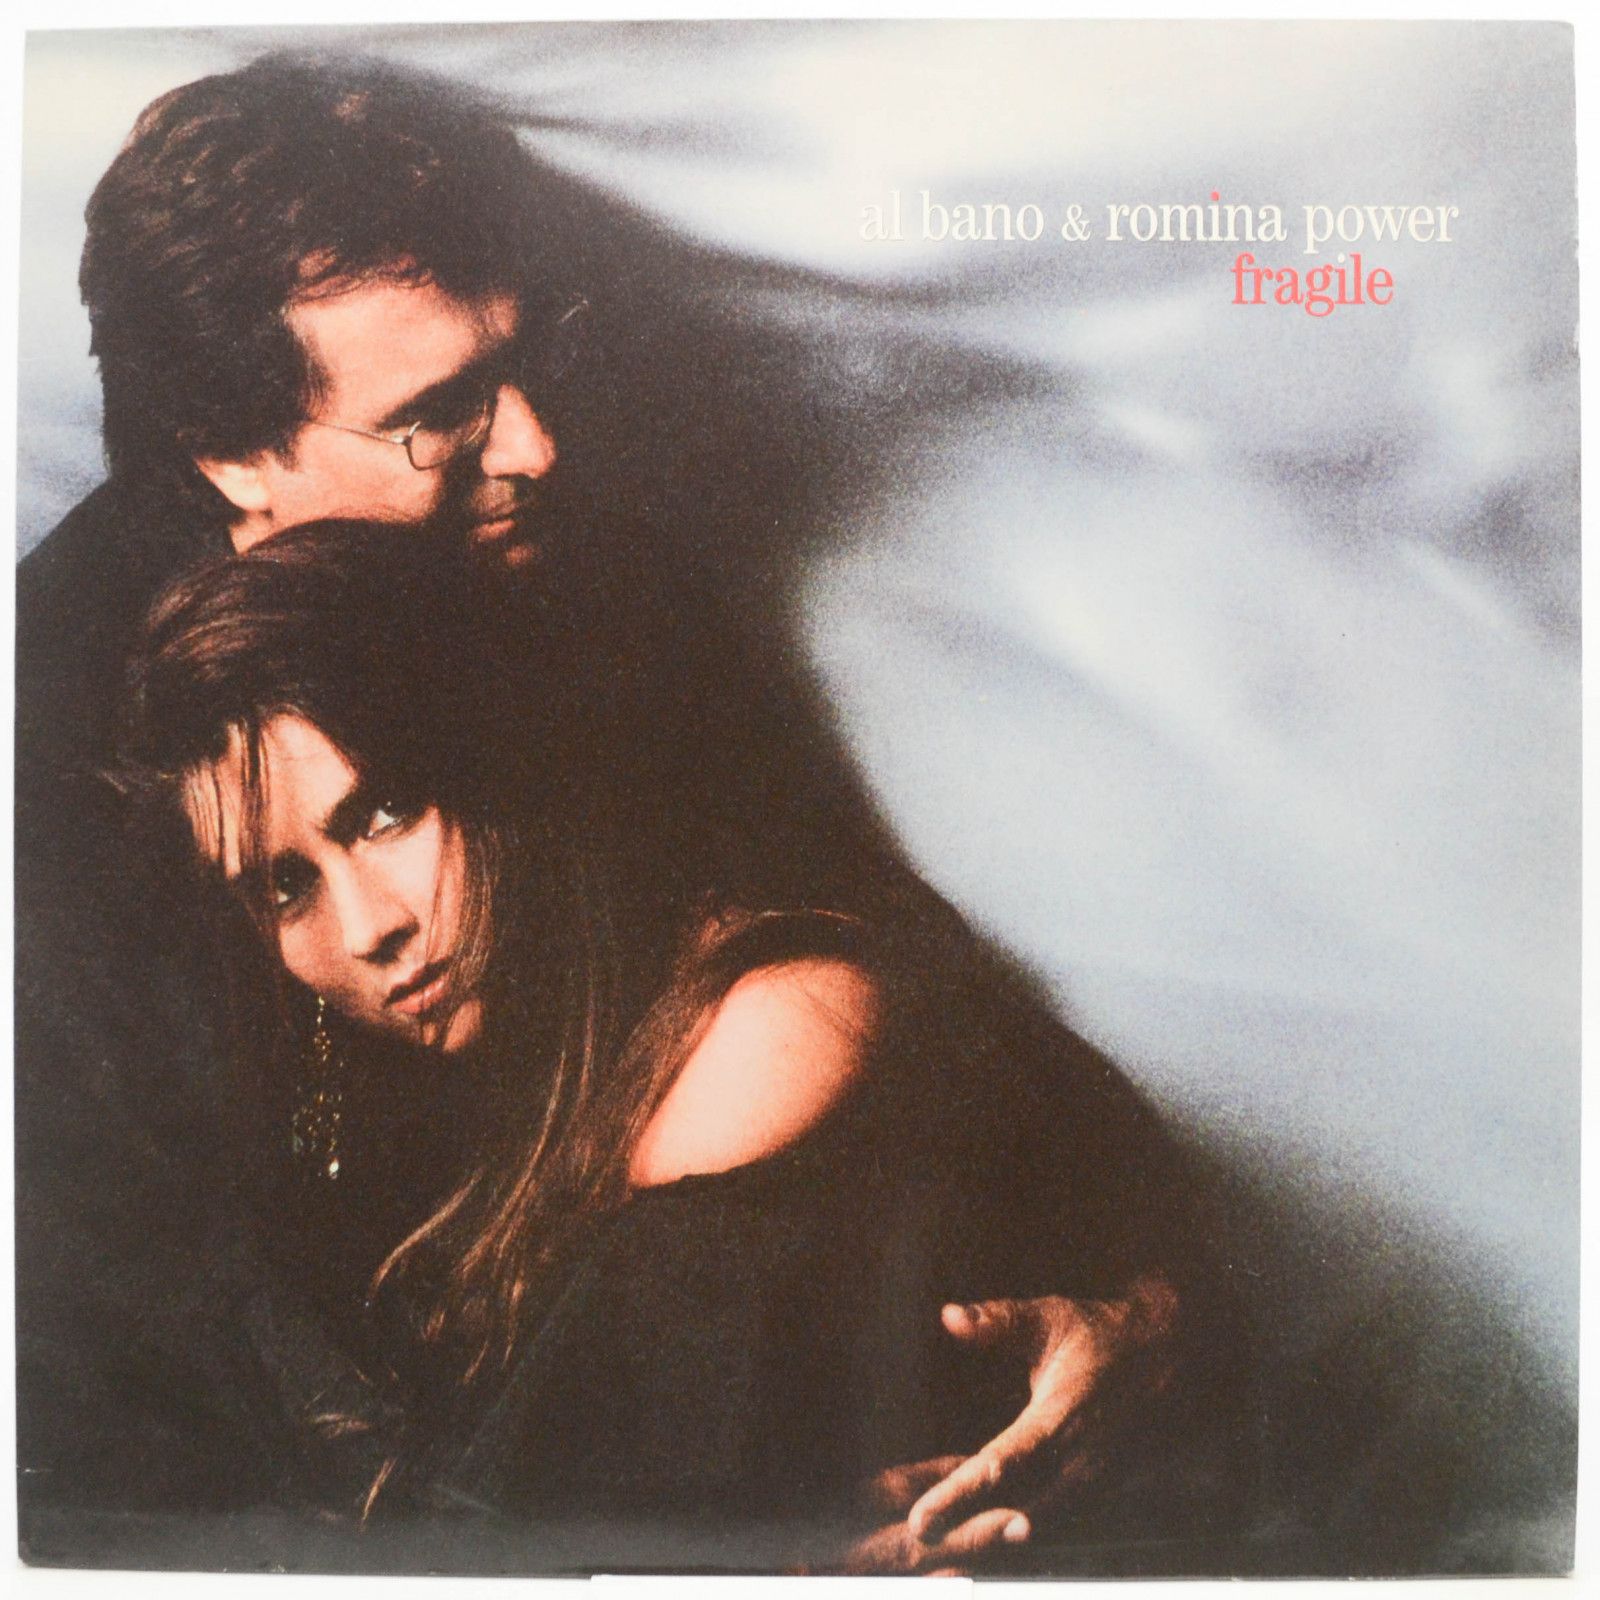 Al Bano & Romina Power — Fragile, 1988